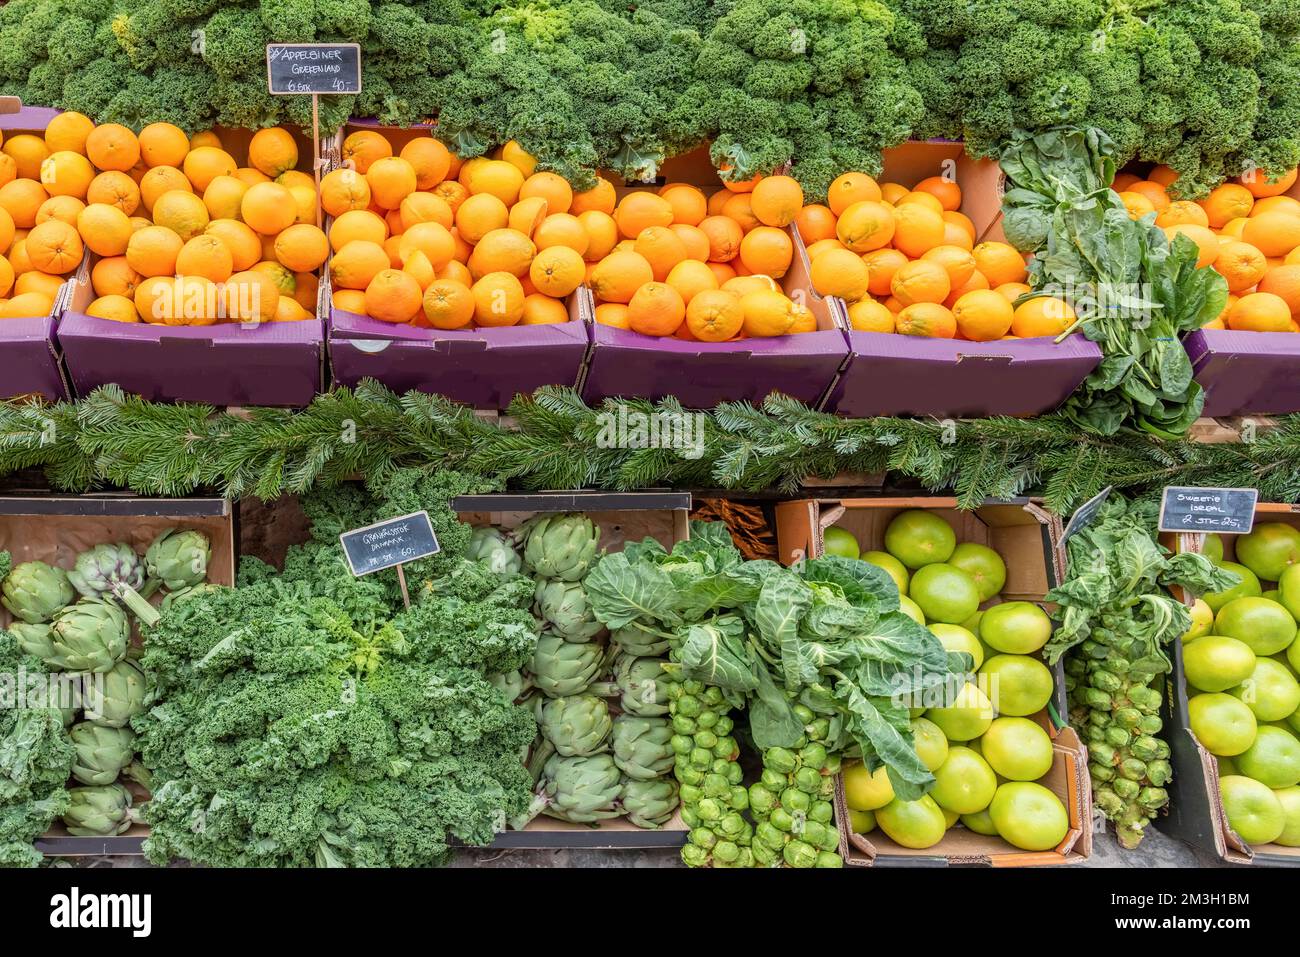 https://c8.alamy.com/comp/2M3H1BM/a-selection-of-fresh-fruit-and-vegetables-2M3H1BM.jpg